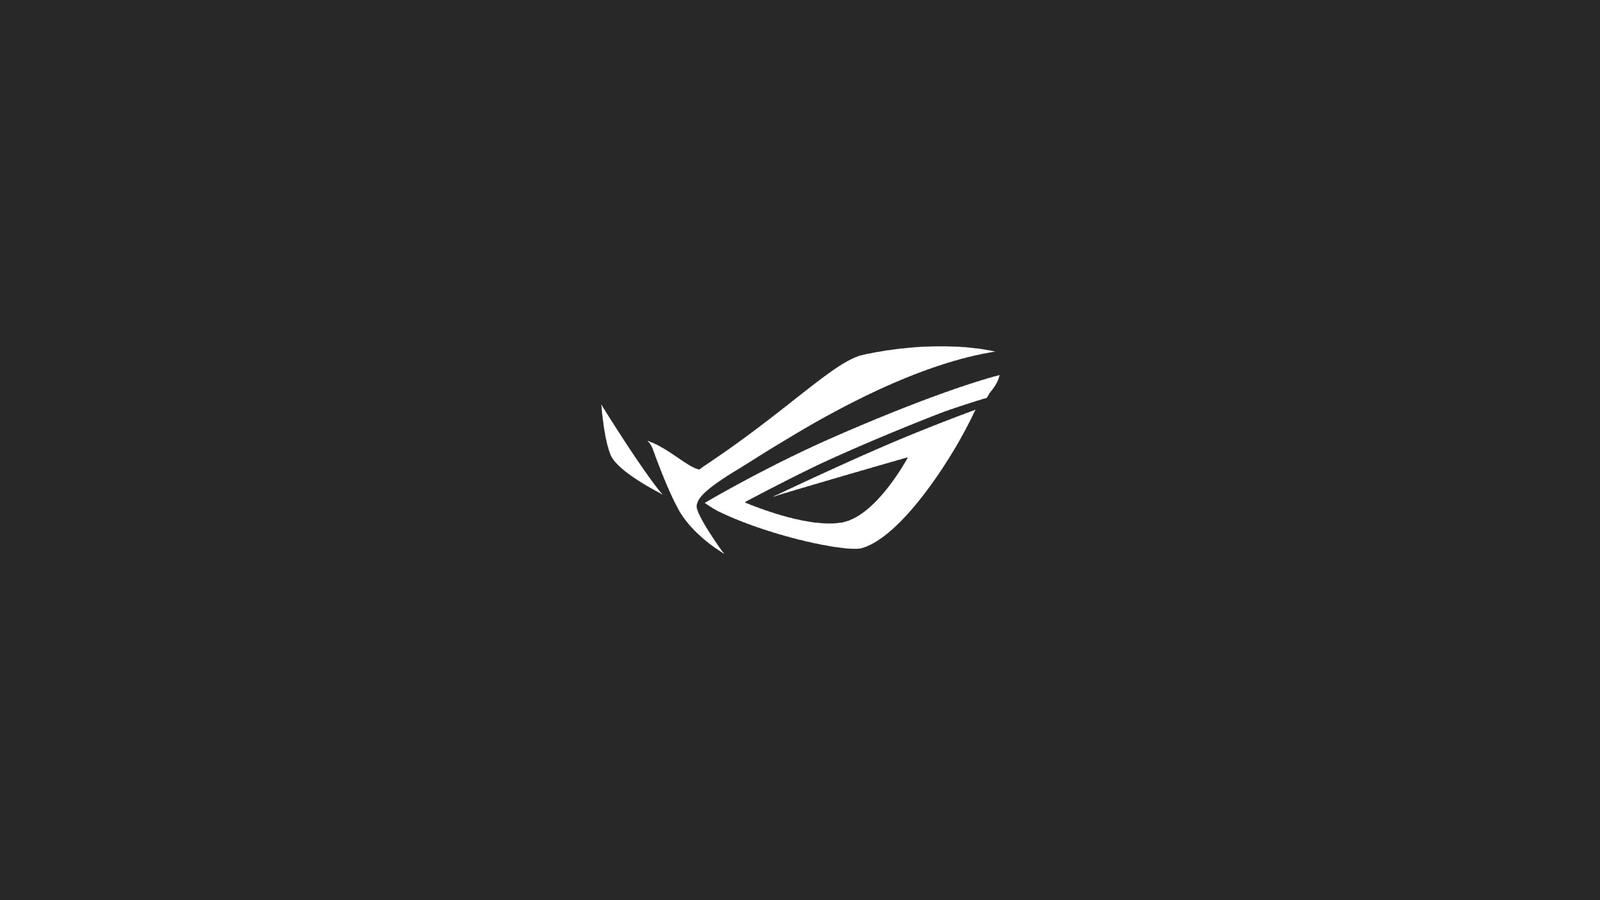 Бесплатное фото Логотип Asus на черном фоне